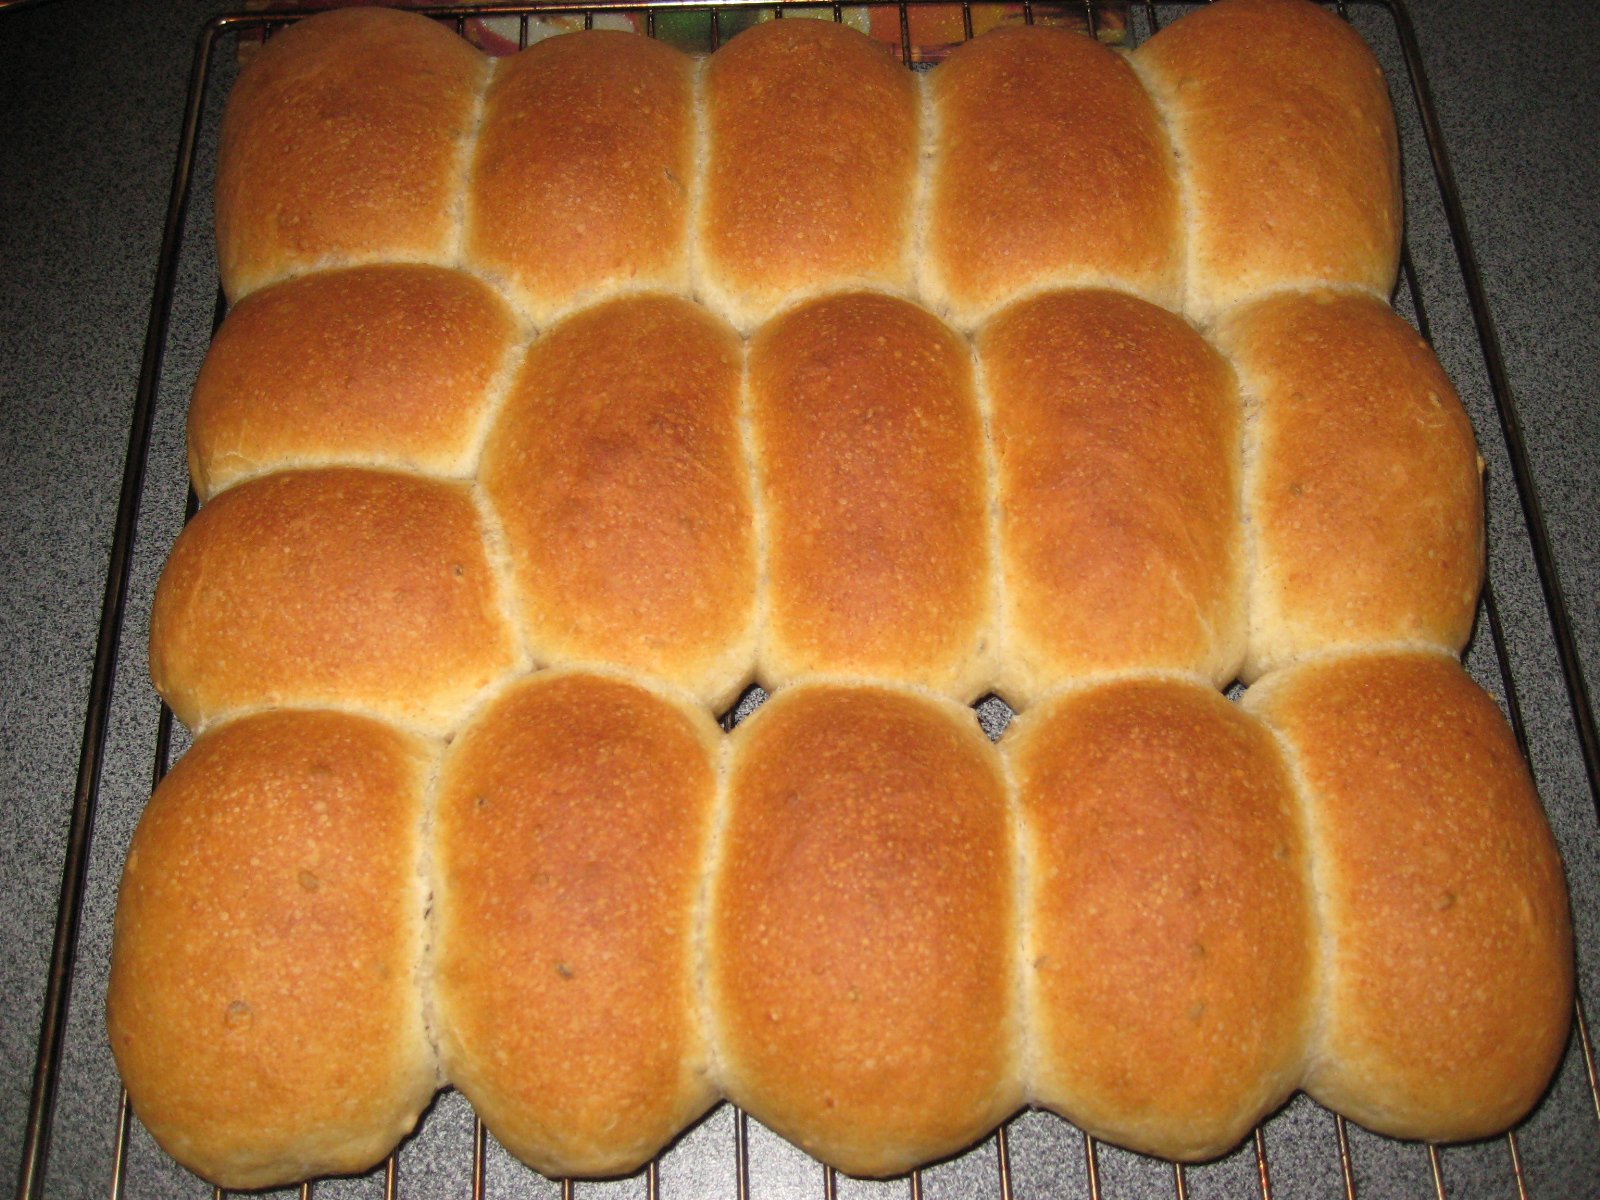 Lena's buns